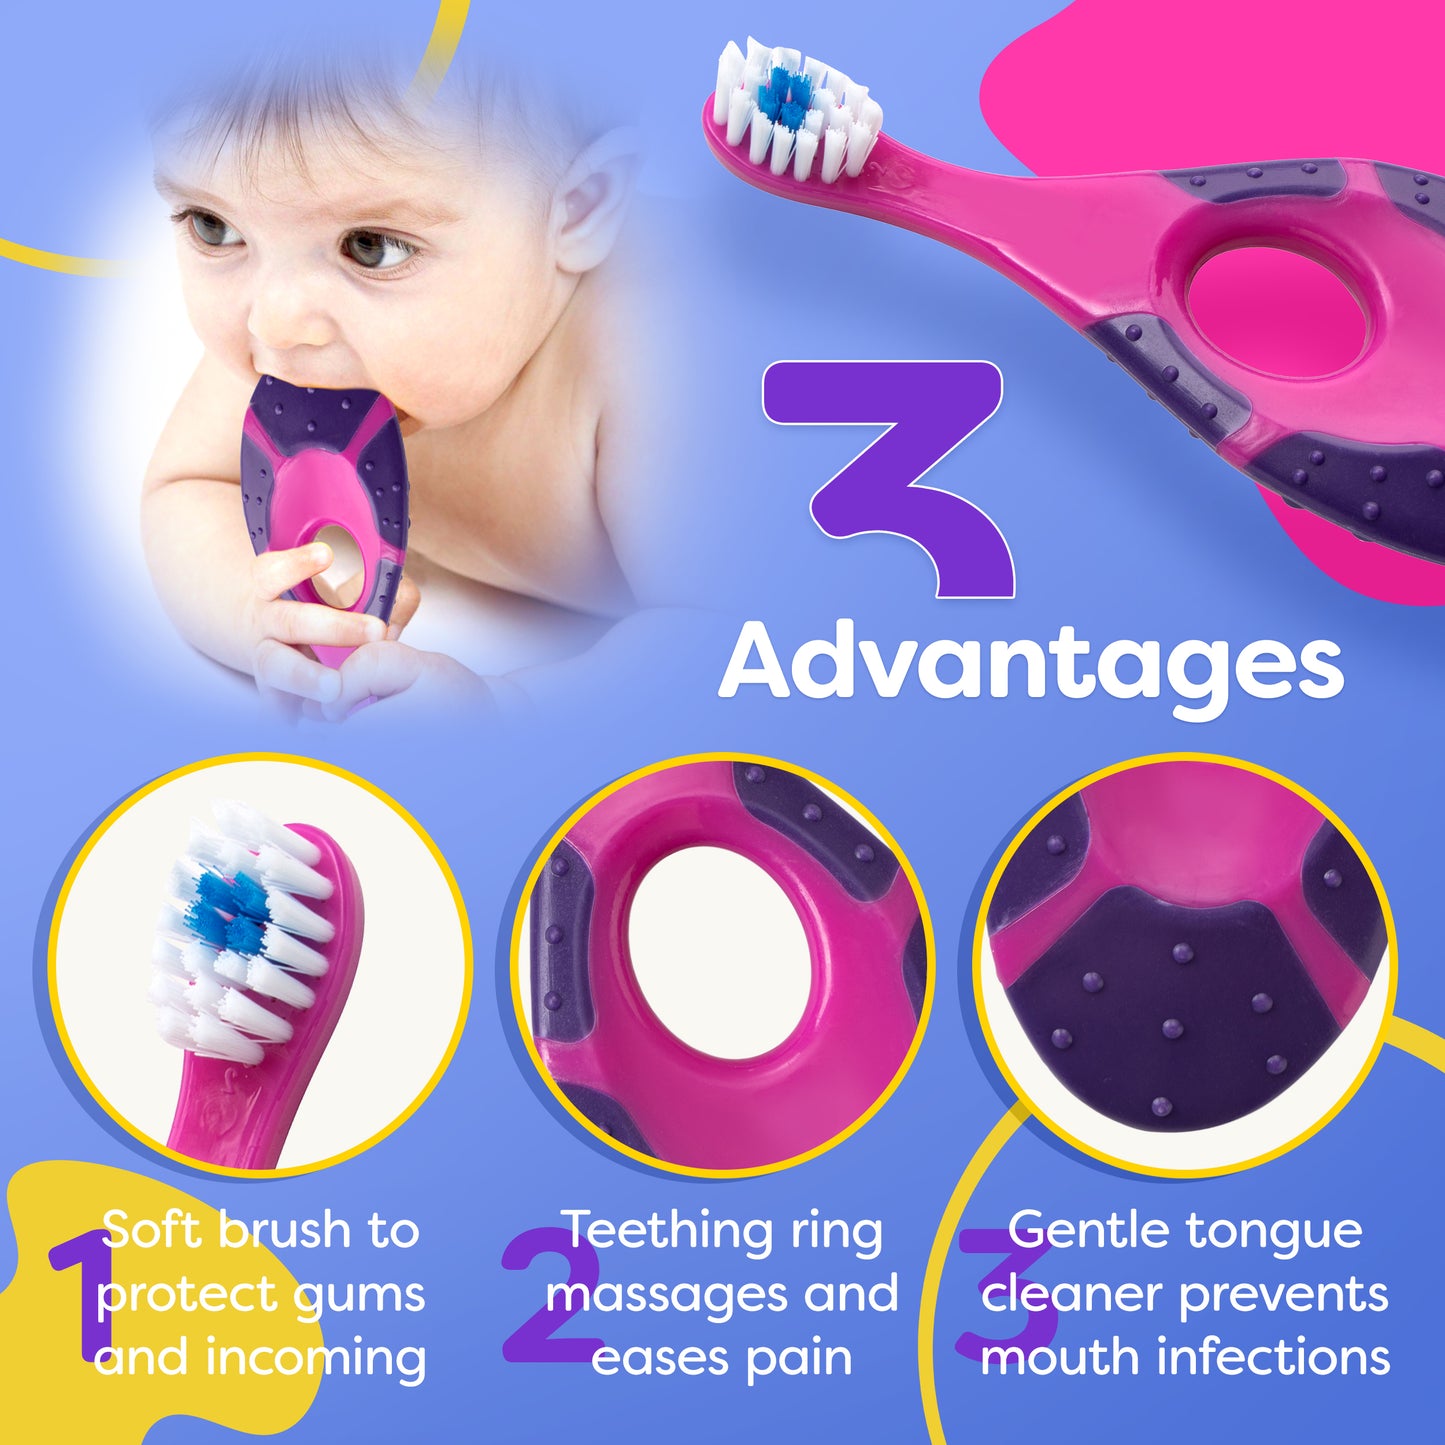 Trueocity Baby Toothbrush 4 Pack & Bonus Silicone Finger Brush, Soft Bristles, Toddler Toothbrushes, Infant & Training w/ Teething Handle, 0-2 Years, Pink Set